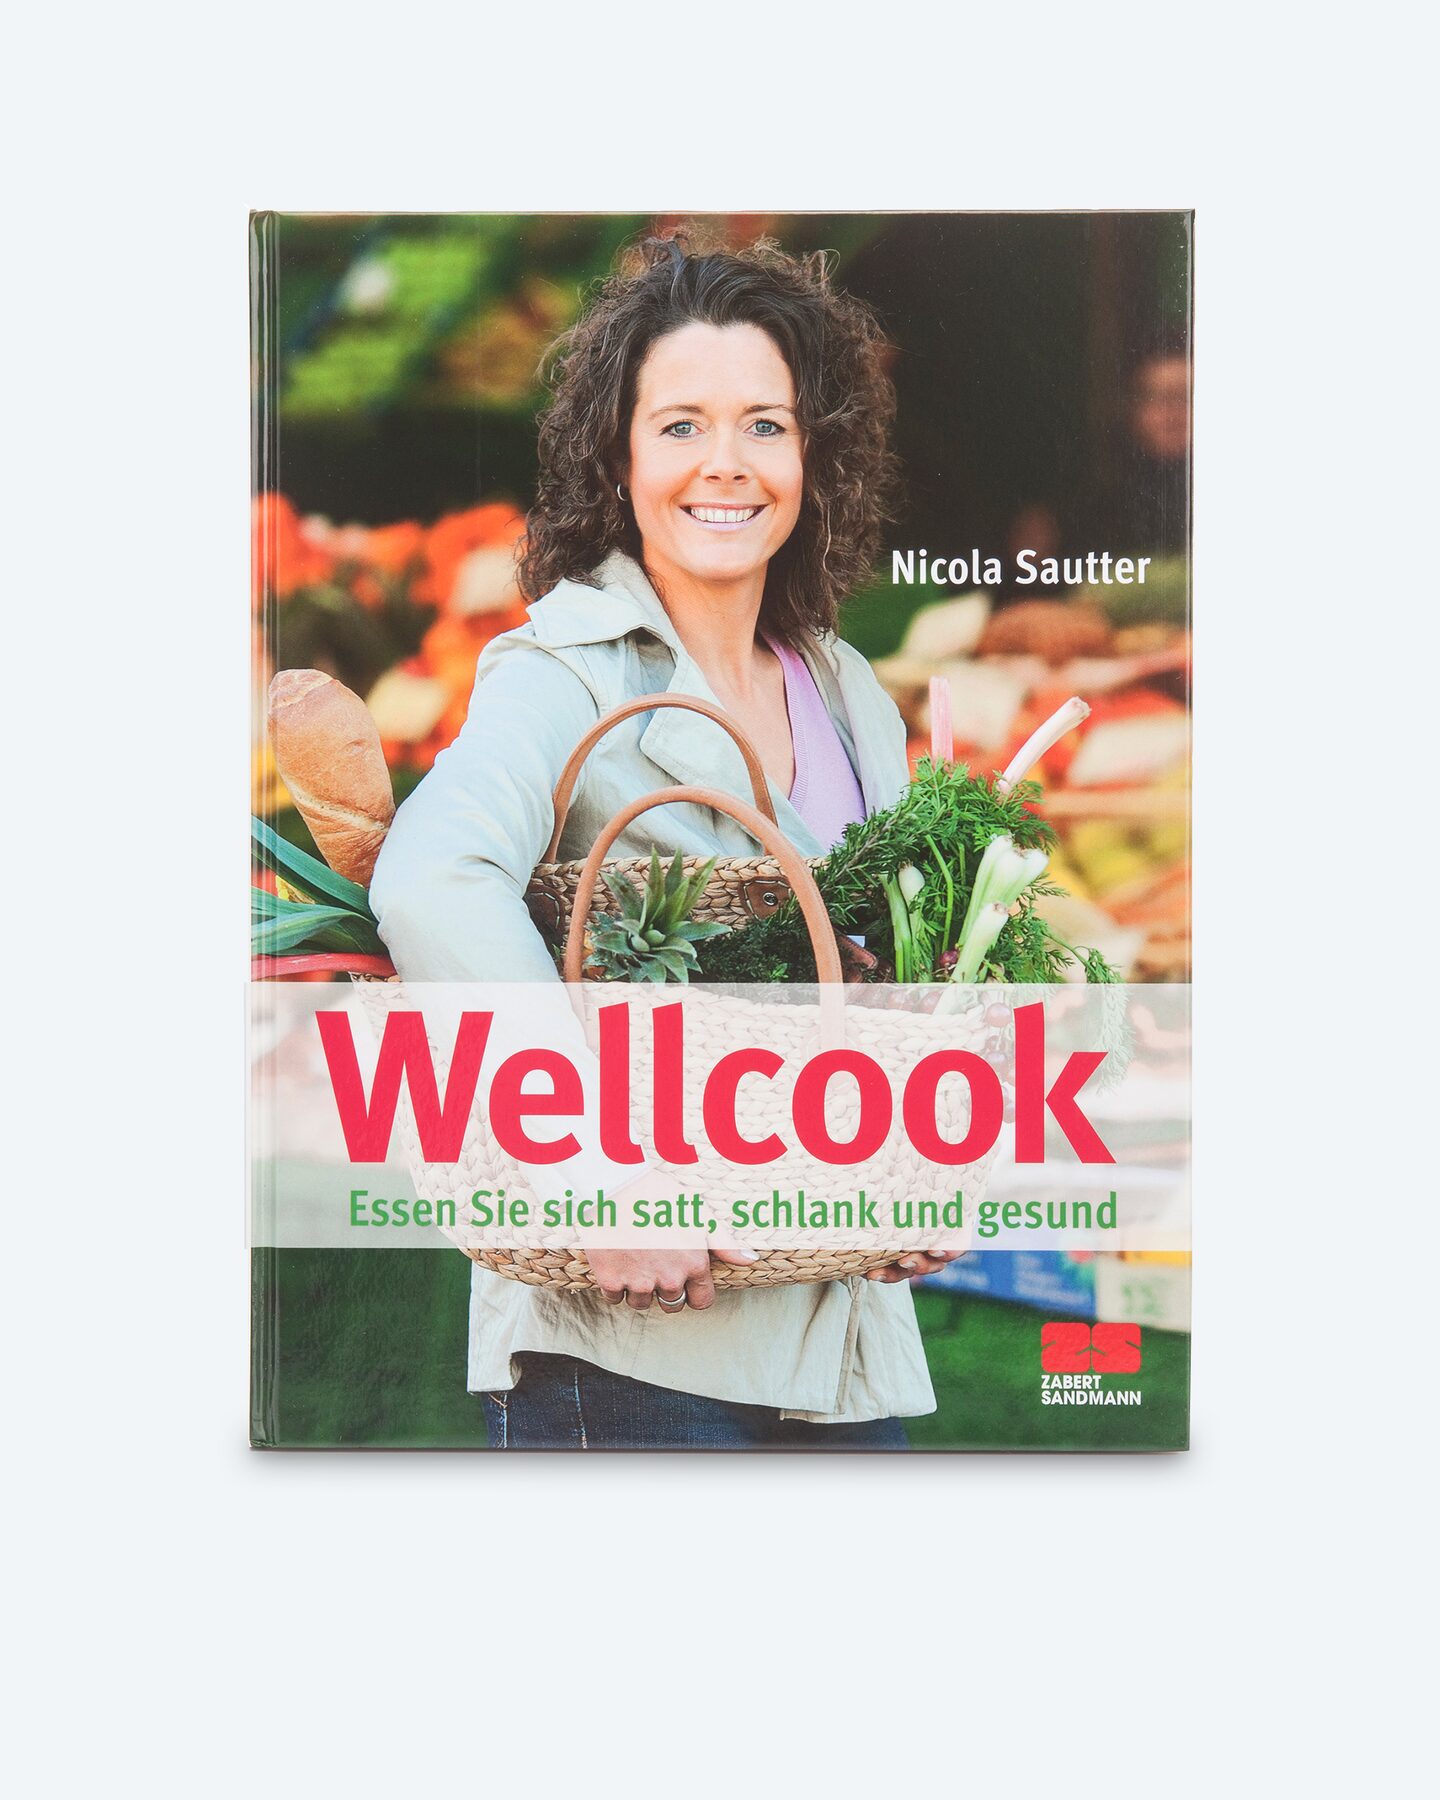 Produktabbildung für Buch "Wellcook"